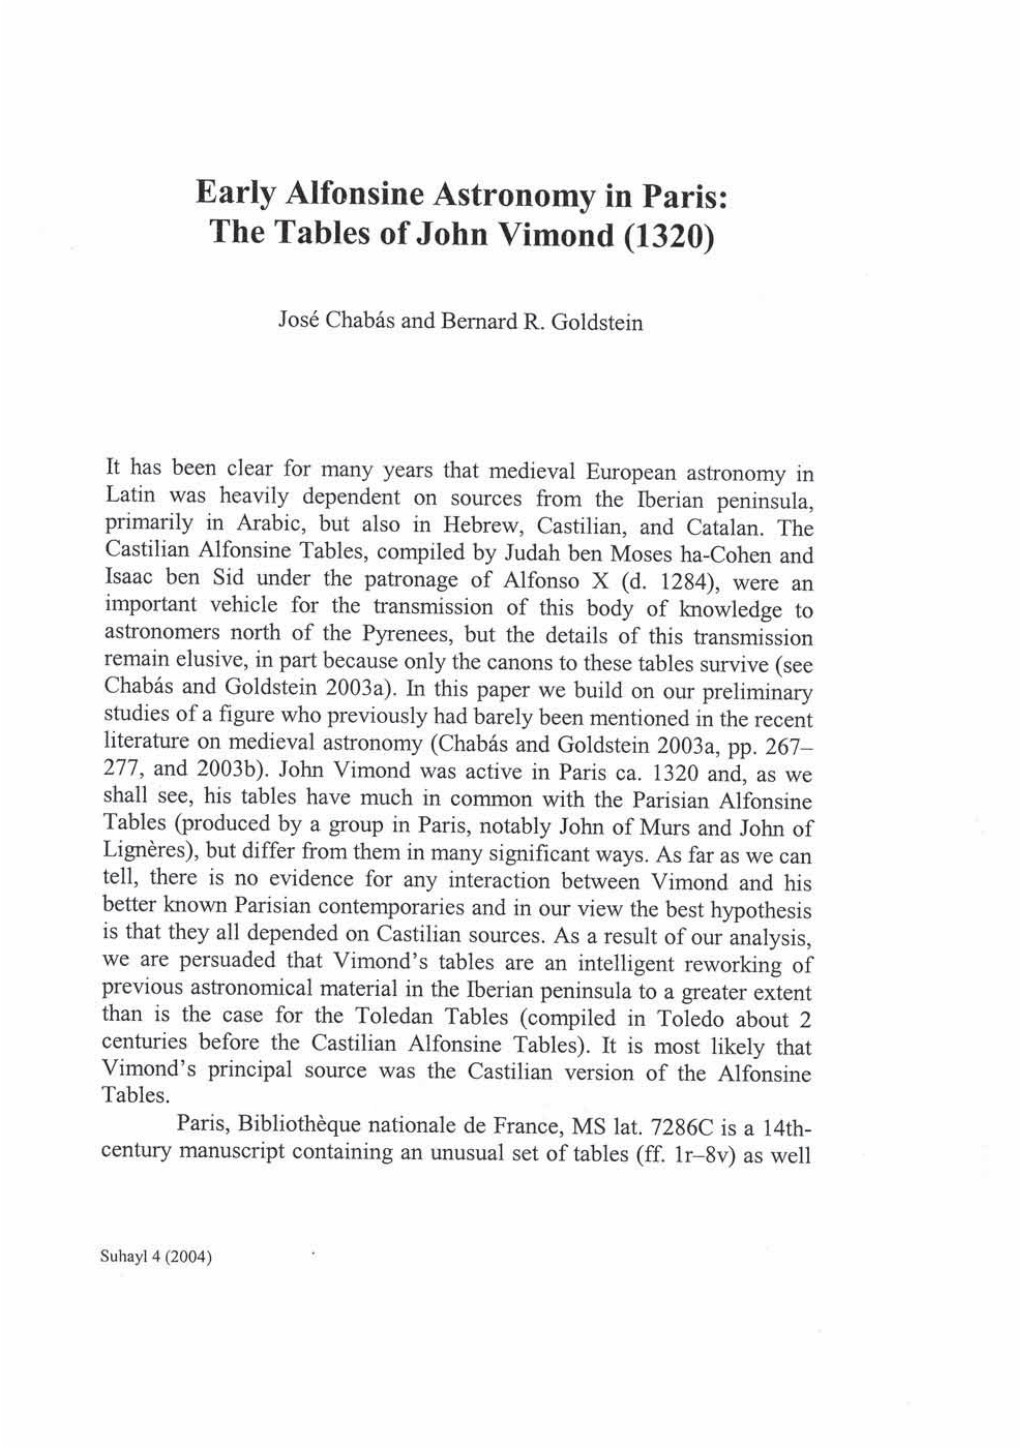 Early Alfonsine Astronomy in Paris: the Tables Ofjohn Vimond (1320)